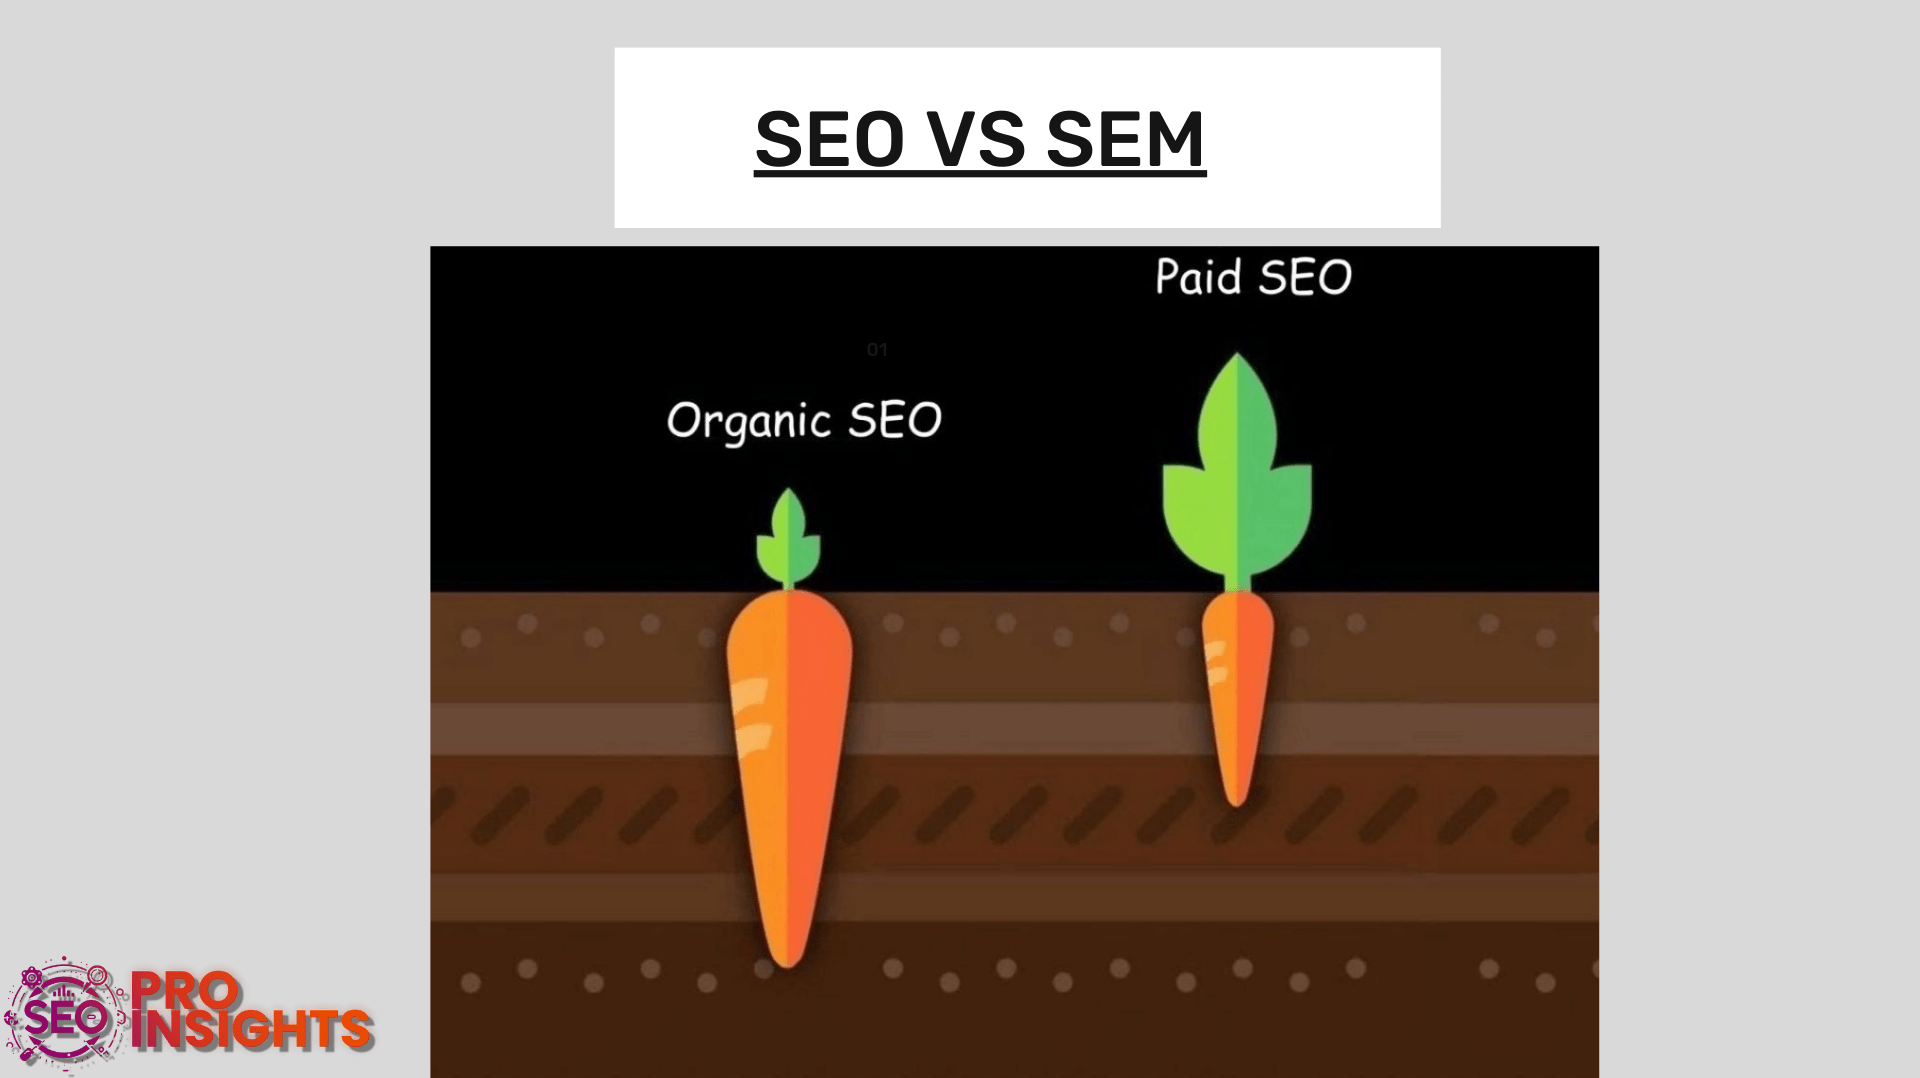 organic seo vs paid seo